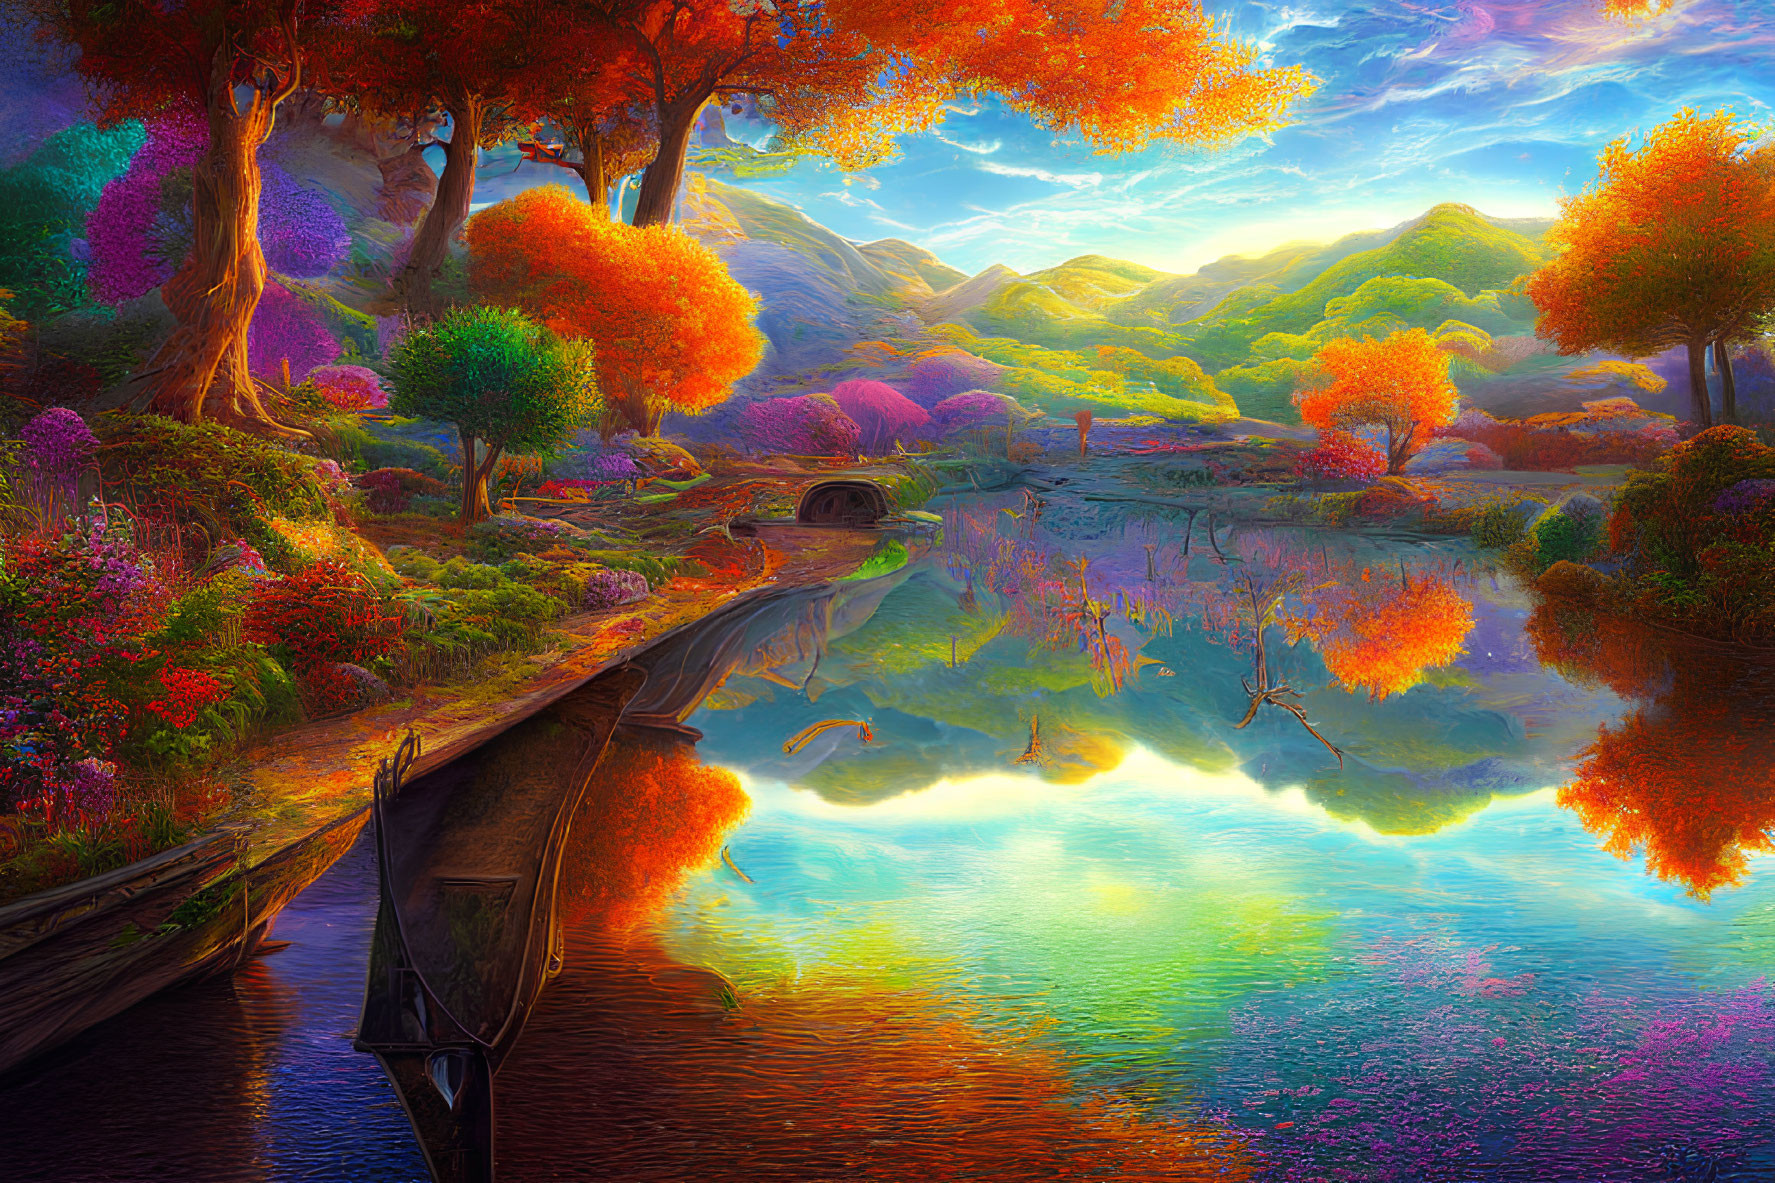 Colorful Autumn Landscape with Lake, Boat, and Stone Bridge